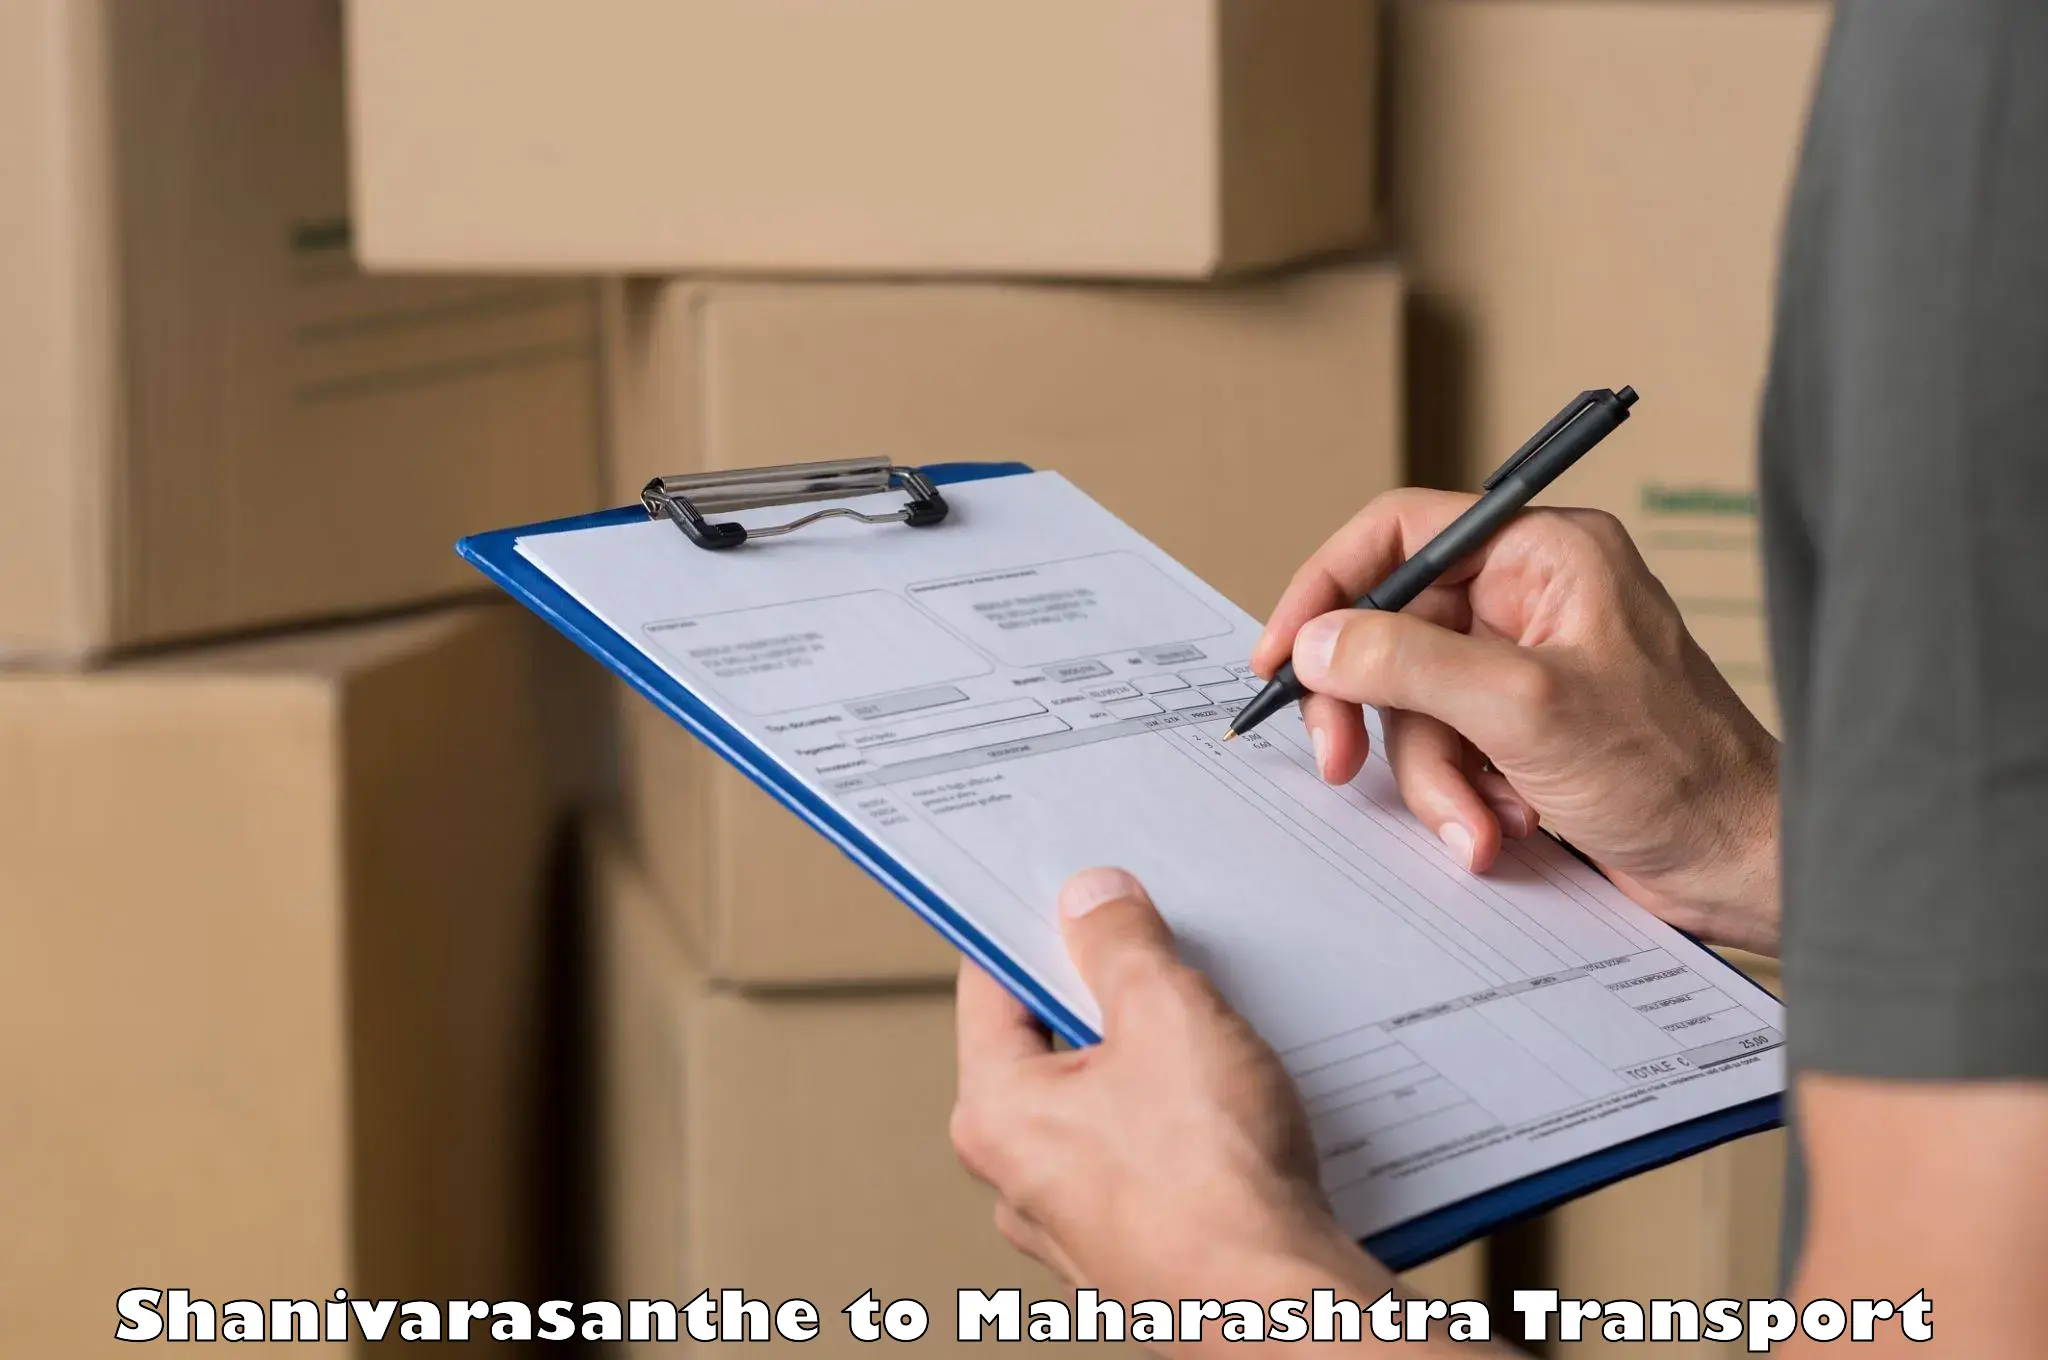 Truck transport companies in India Shanivarasanthe to Mahim